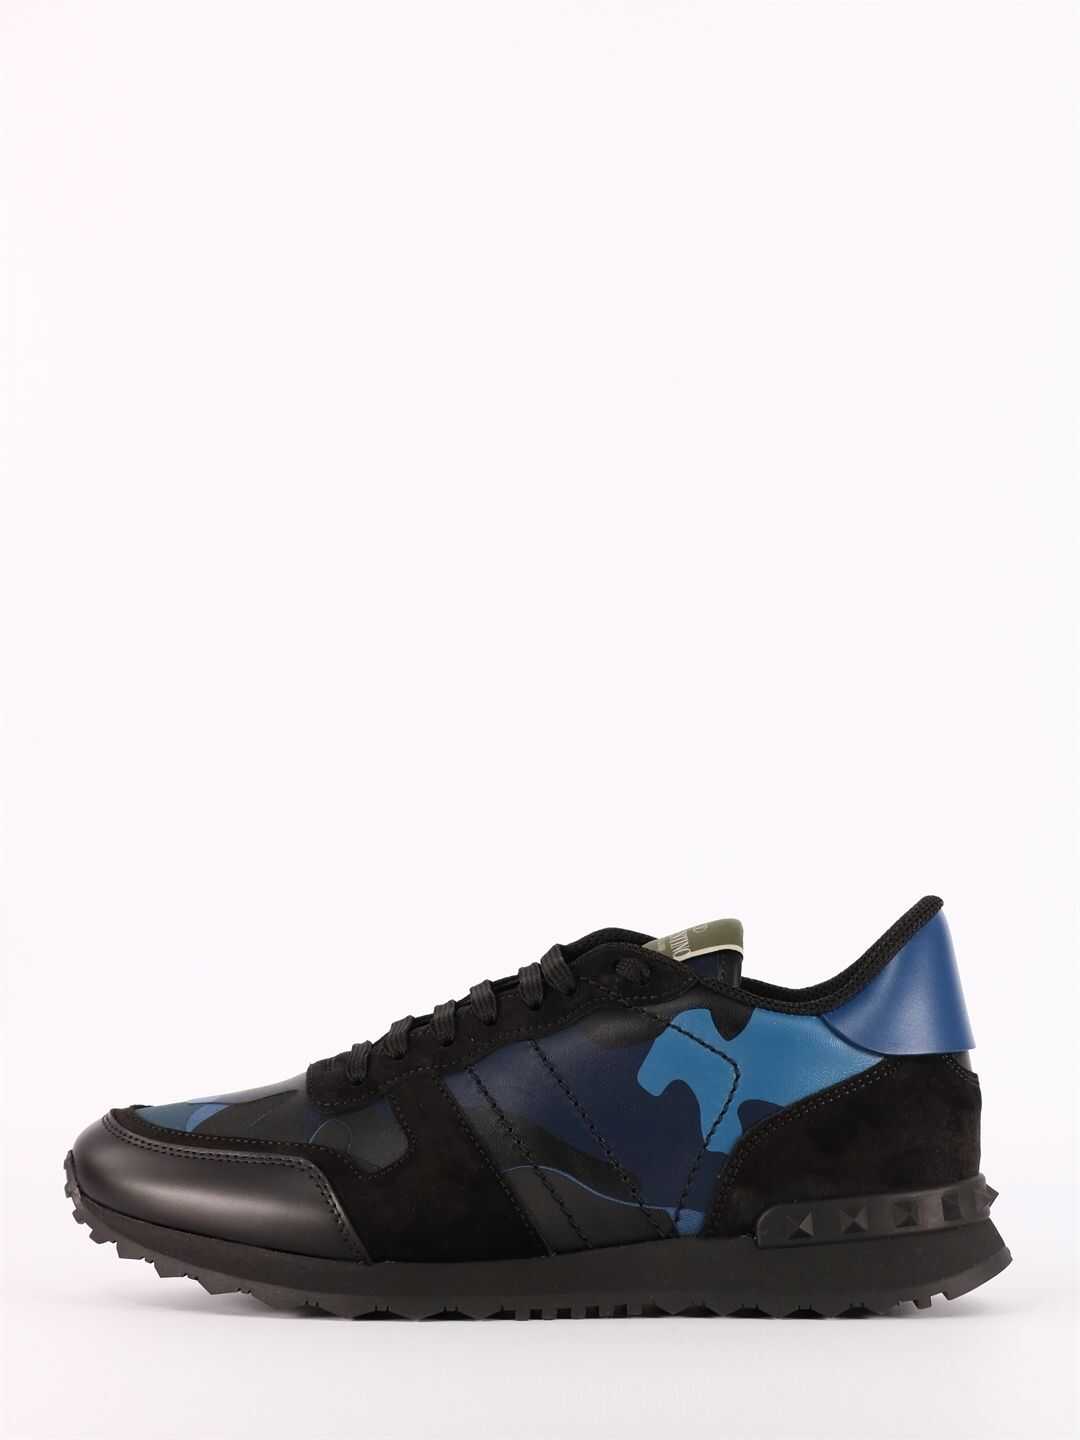 Valentino Garavani Rockrunner Camouflage Sneaker Black